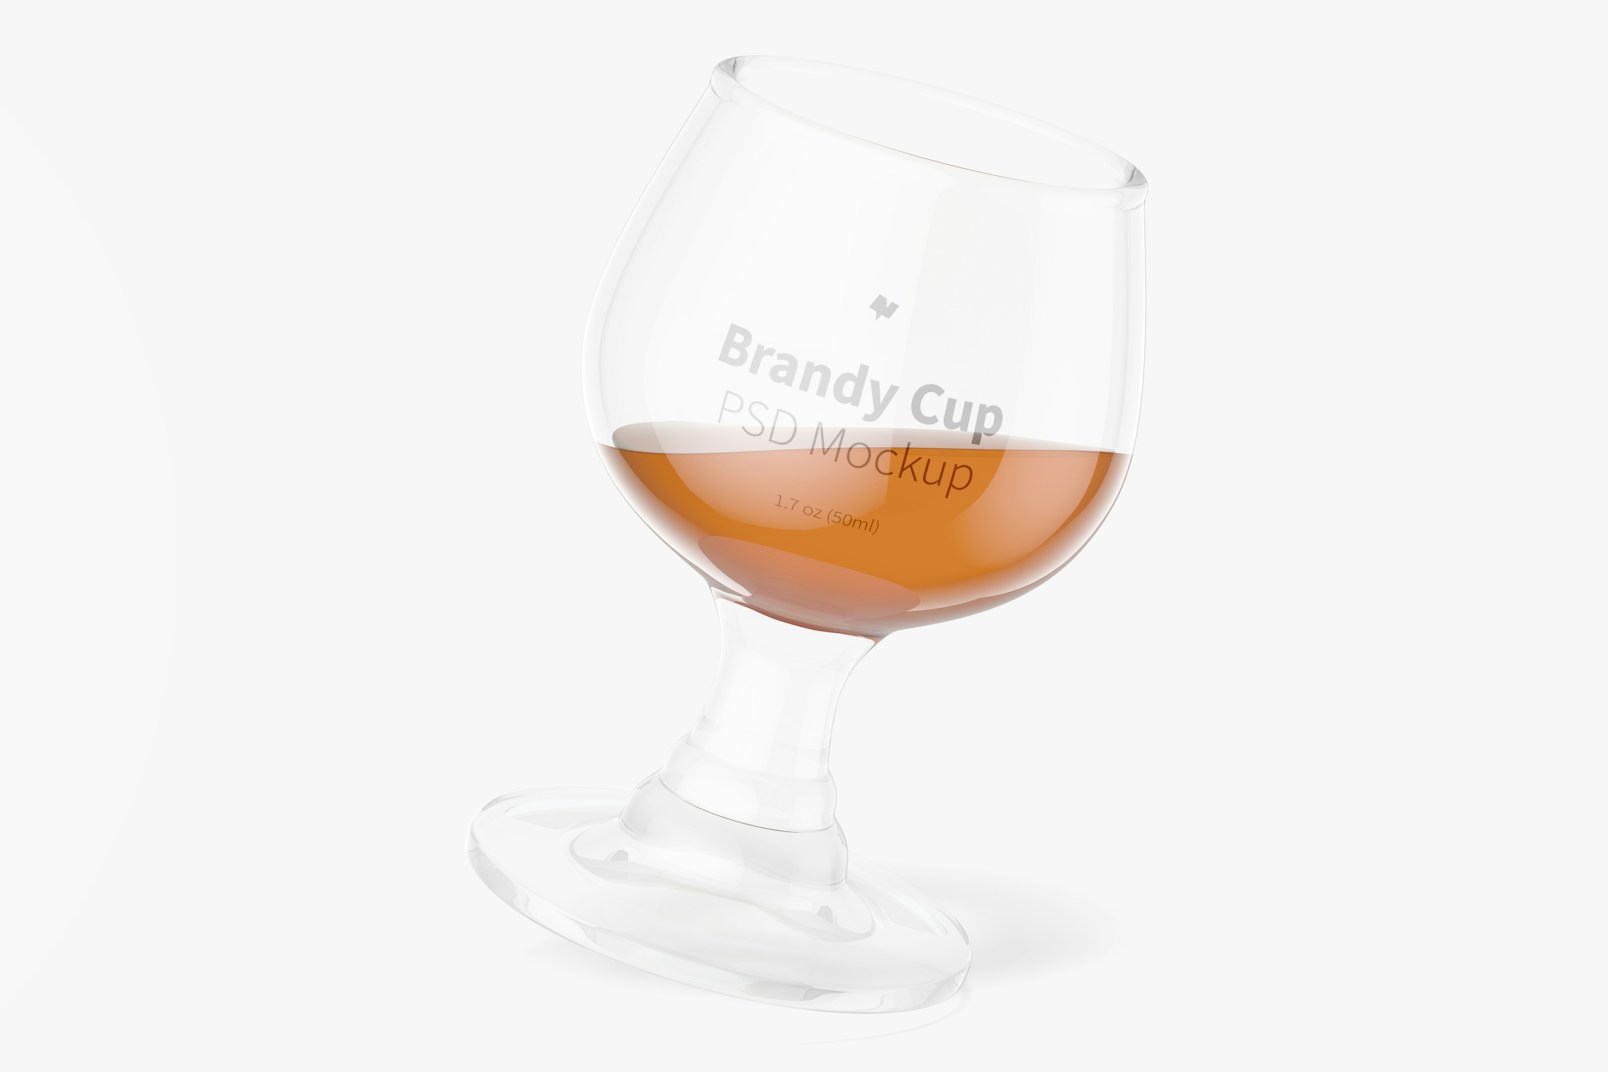 Maqueta de Copa de Brandy de 1.7 oz, Flotando